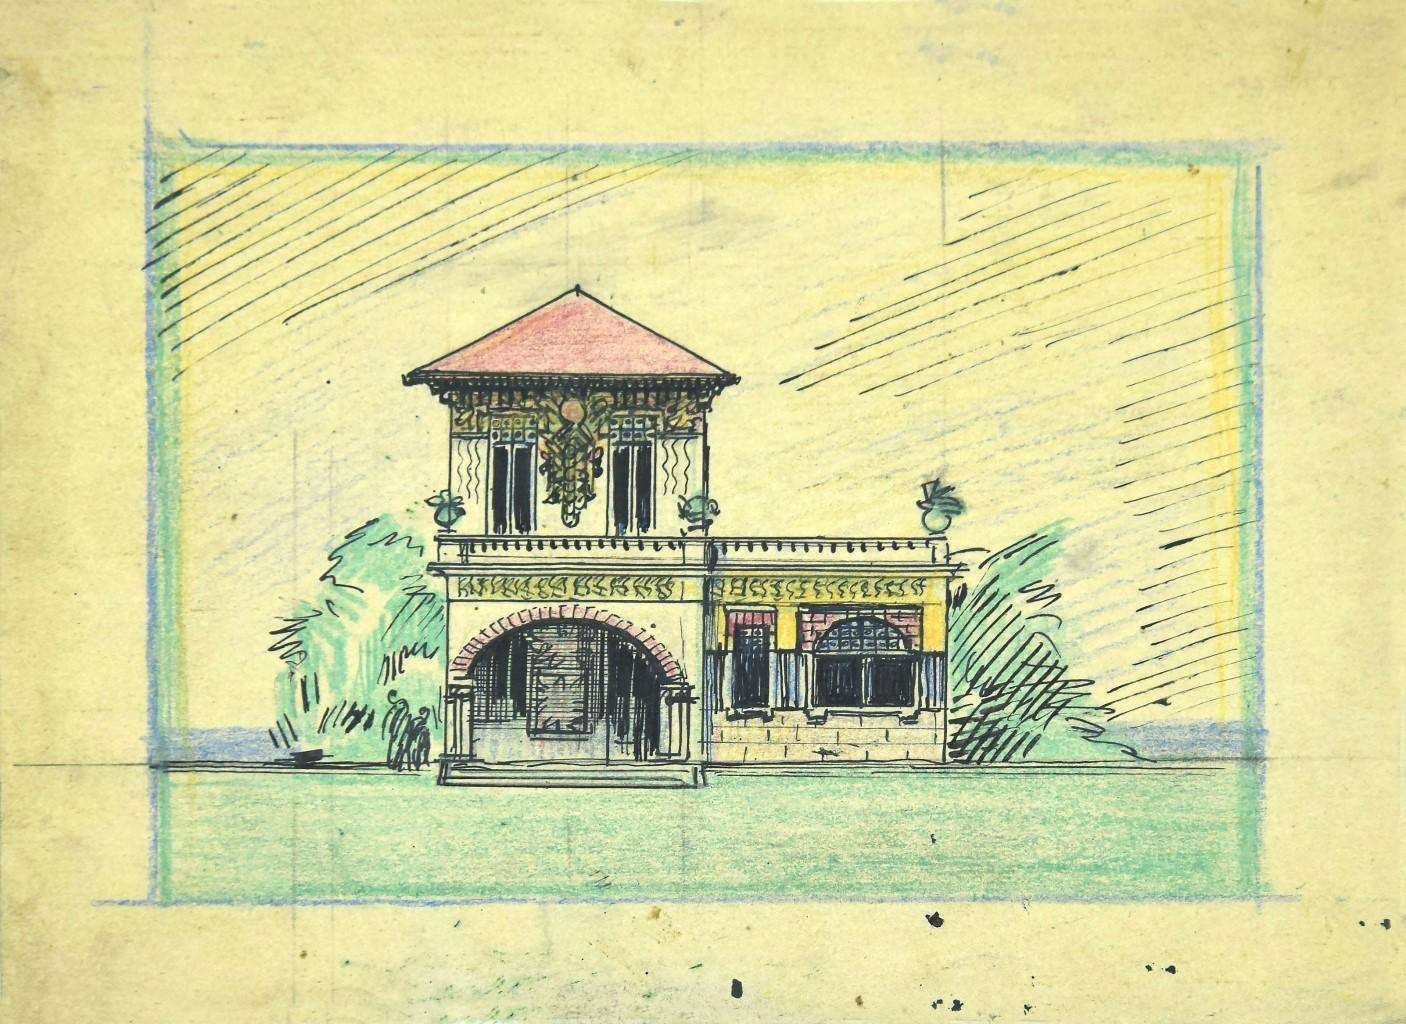 Villa - Ink and Pastel Drawing by Gabriele Galantara - Early 20th Century